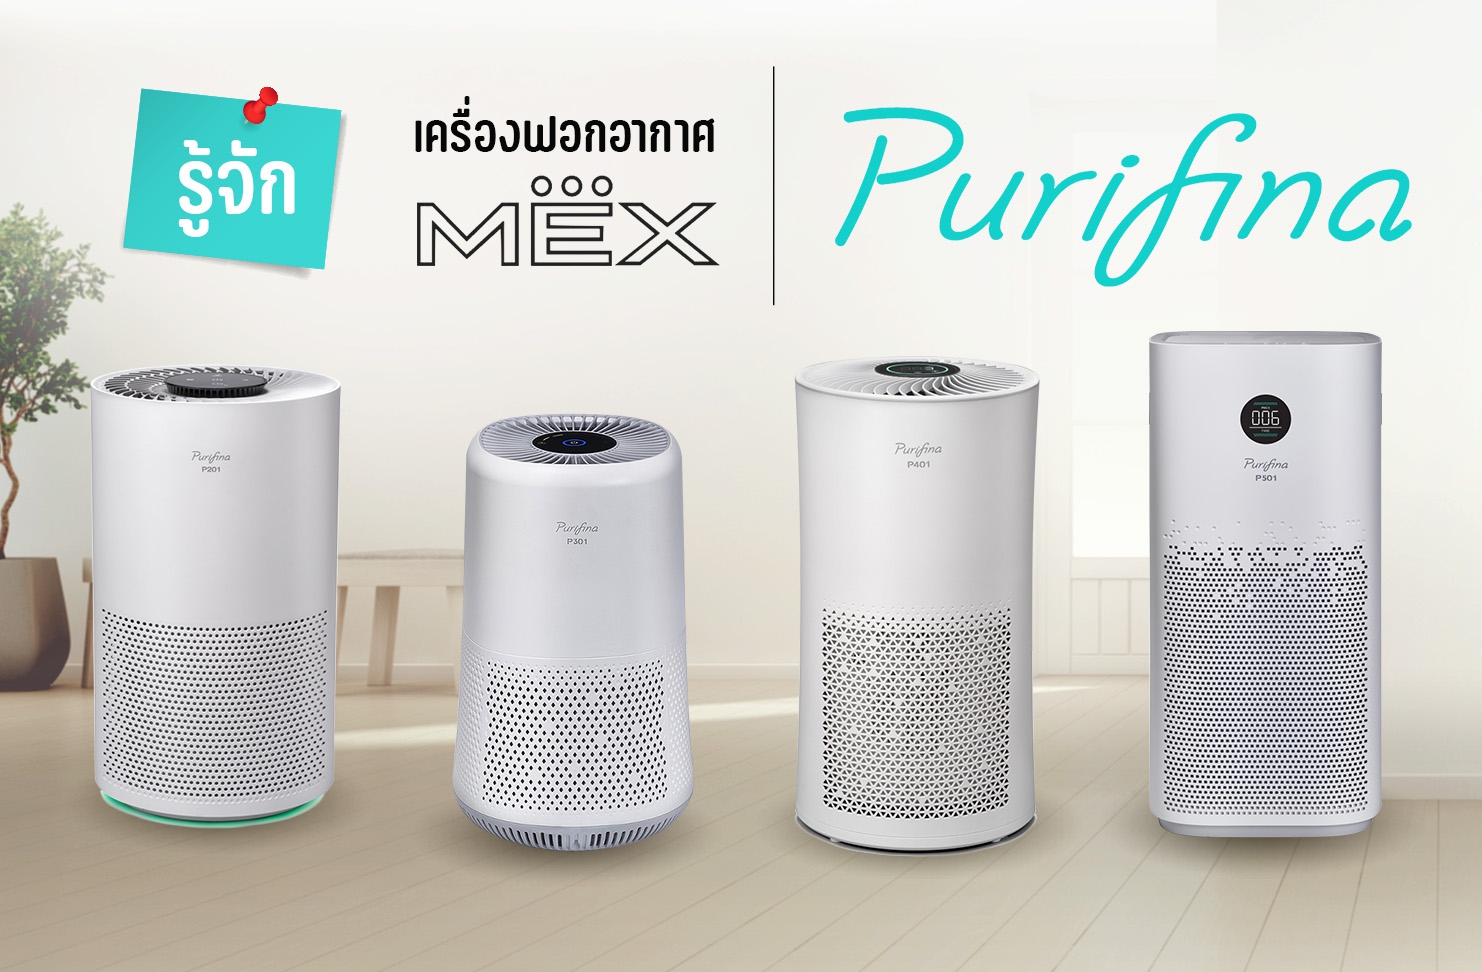 mex-purifina-air-purifier-featured-image